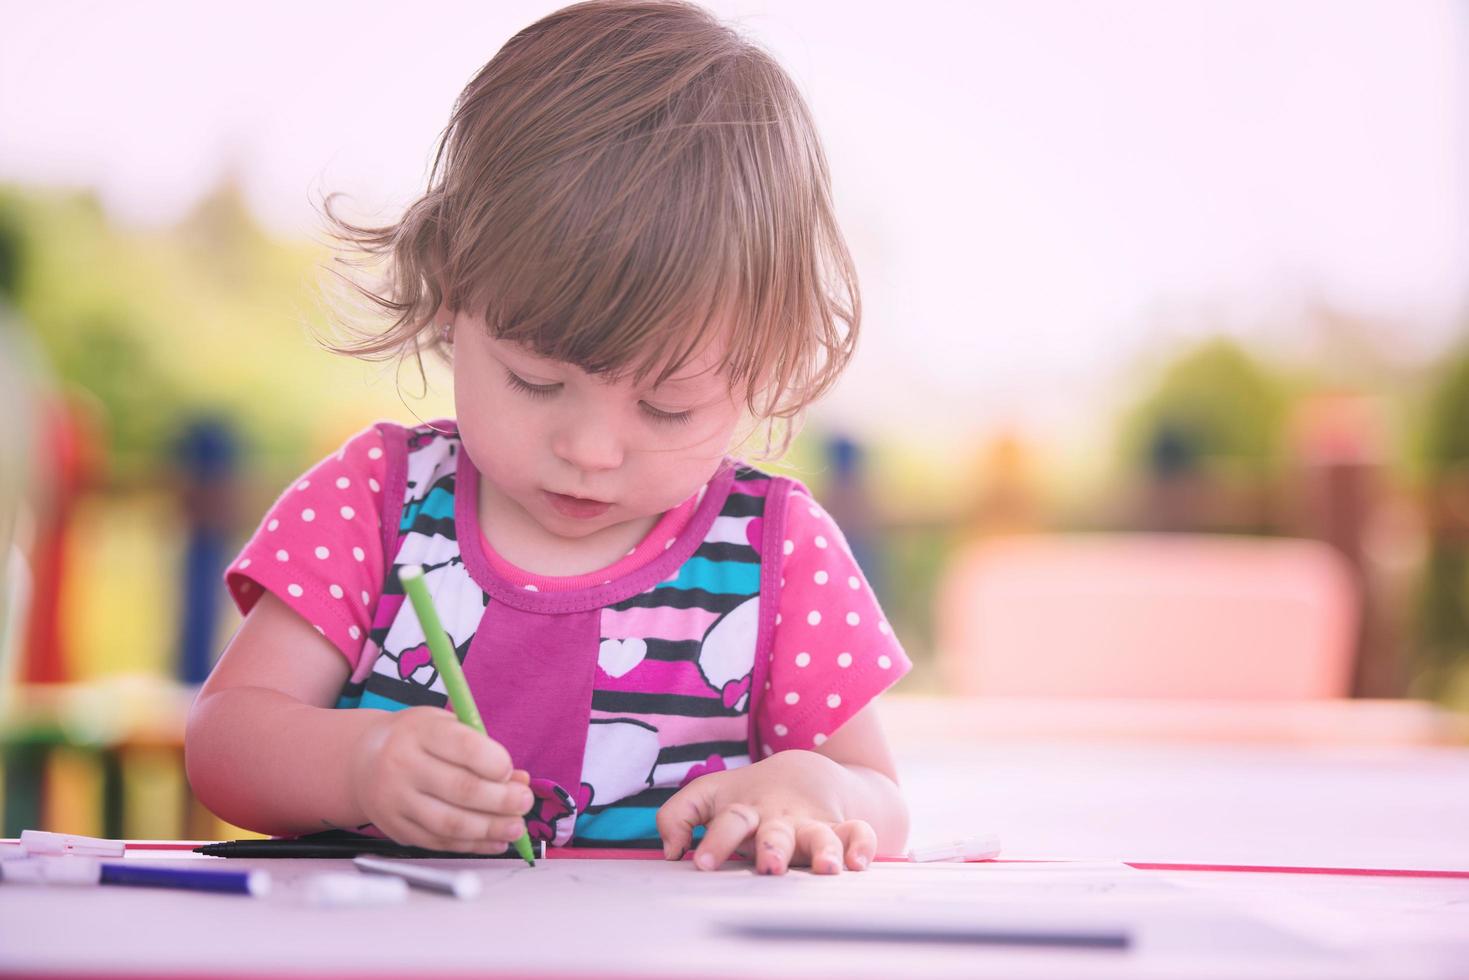 menina desenhando fotos coloridas